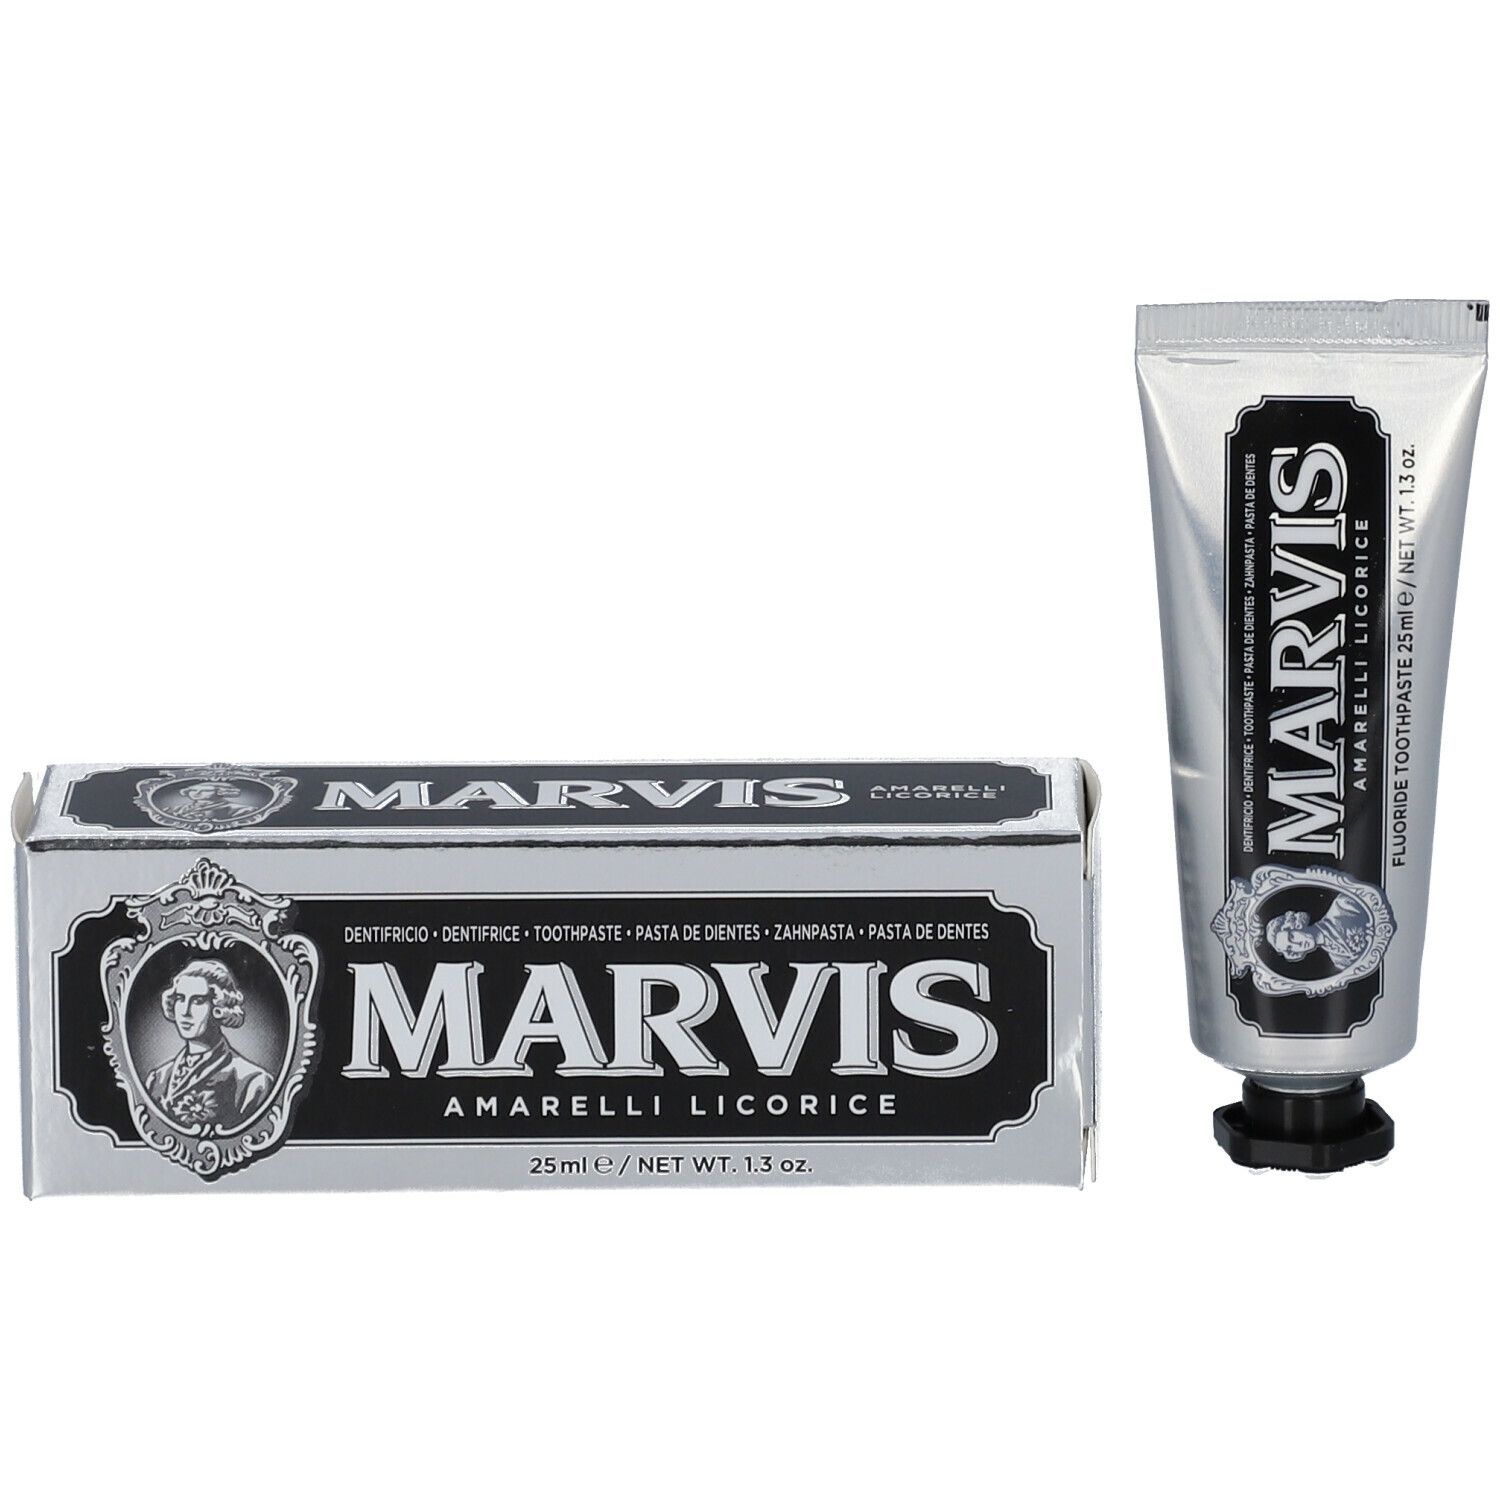 MARVIS Amarelli Licorice Dentifrice